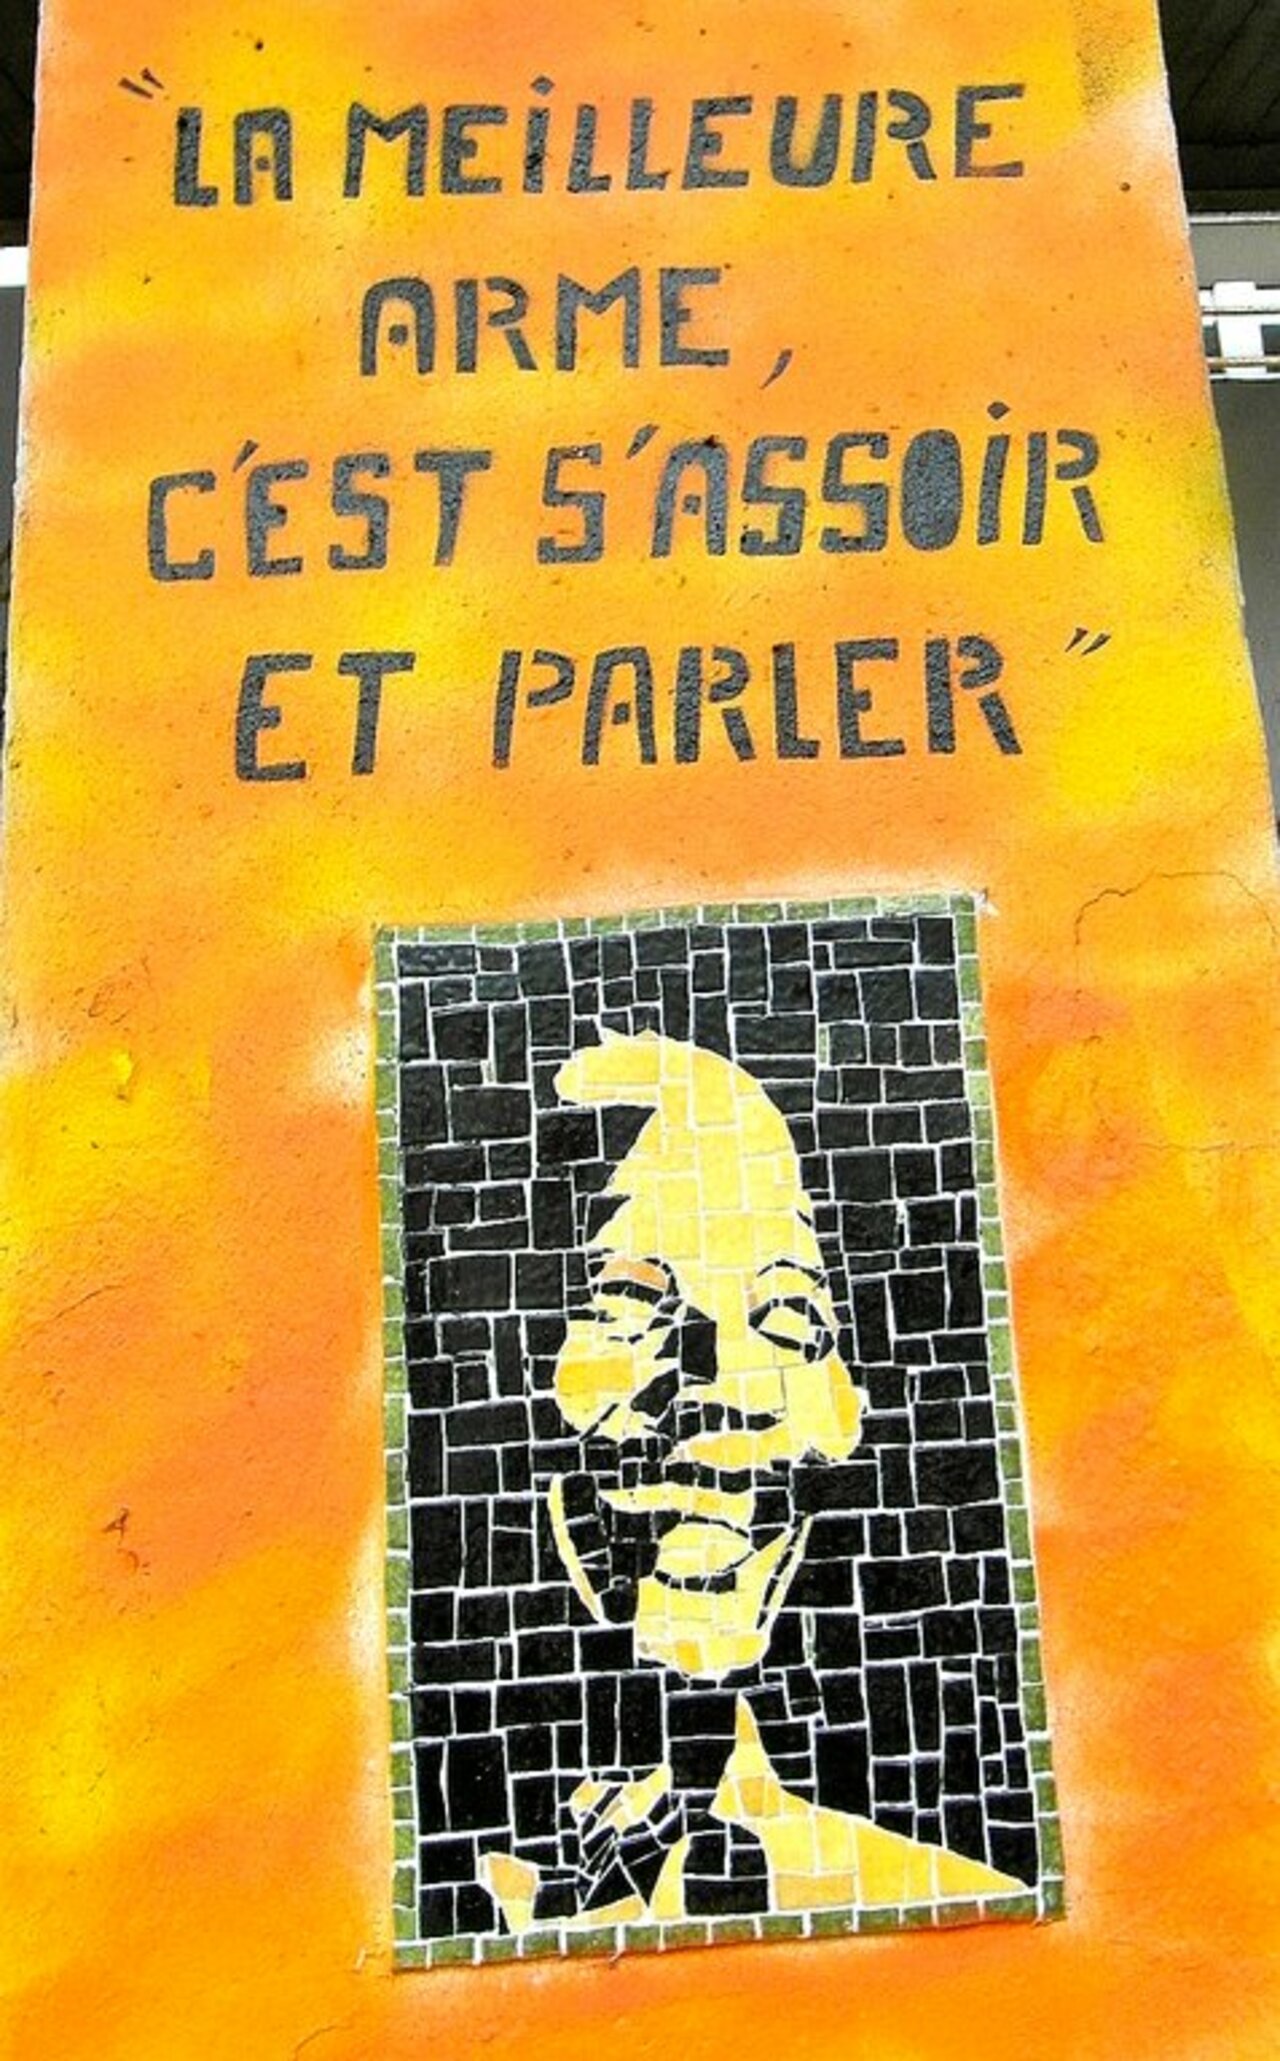 Street Art by anonymous in #Vitry-sur-Seine http://www.urbacolors.com #art #mural #graffiti #streetart https://t.co/VoIIdLGVu9